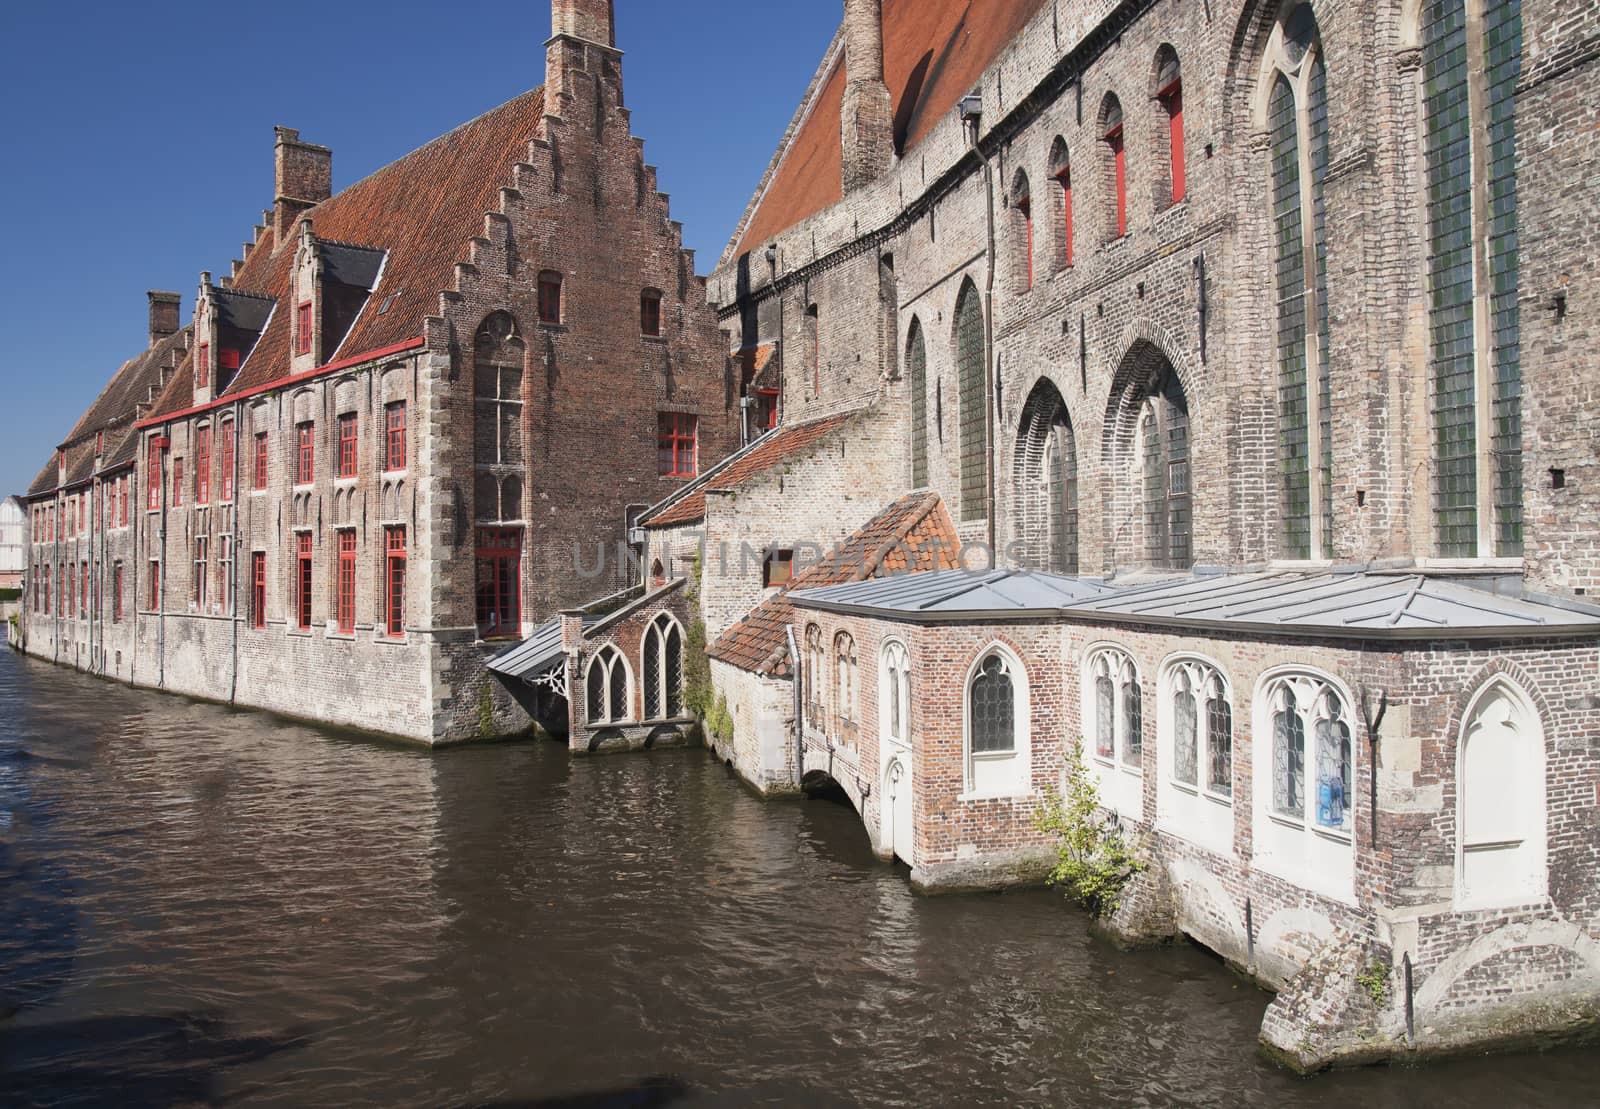 Bruges, medieval city in Belgium

